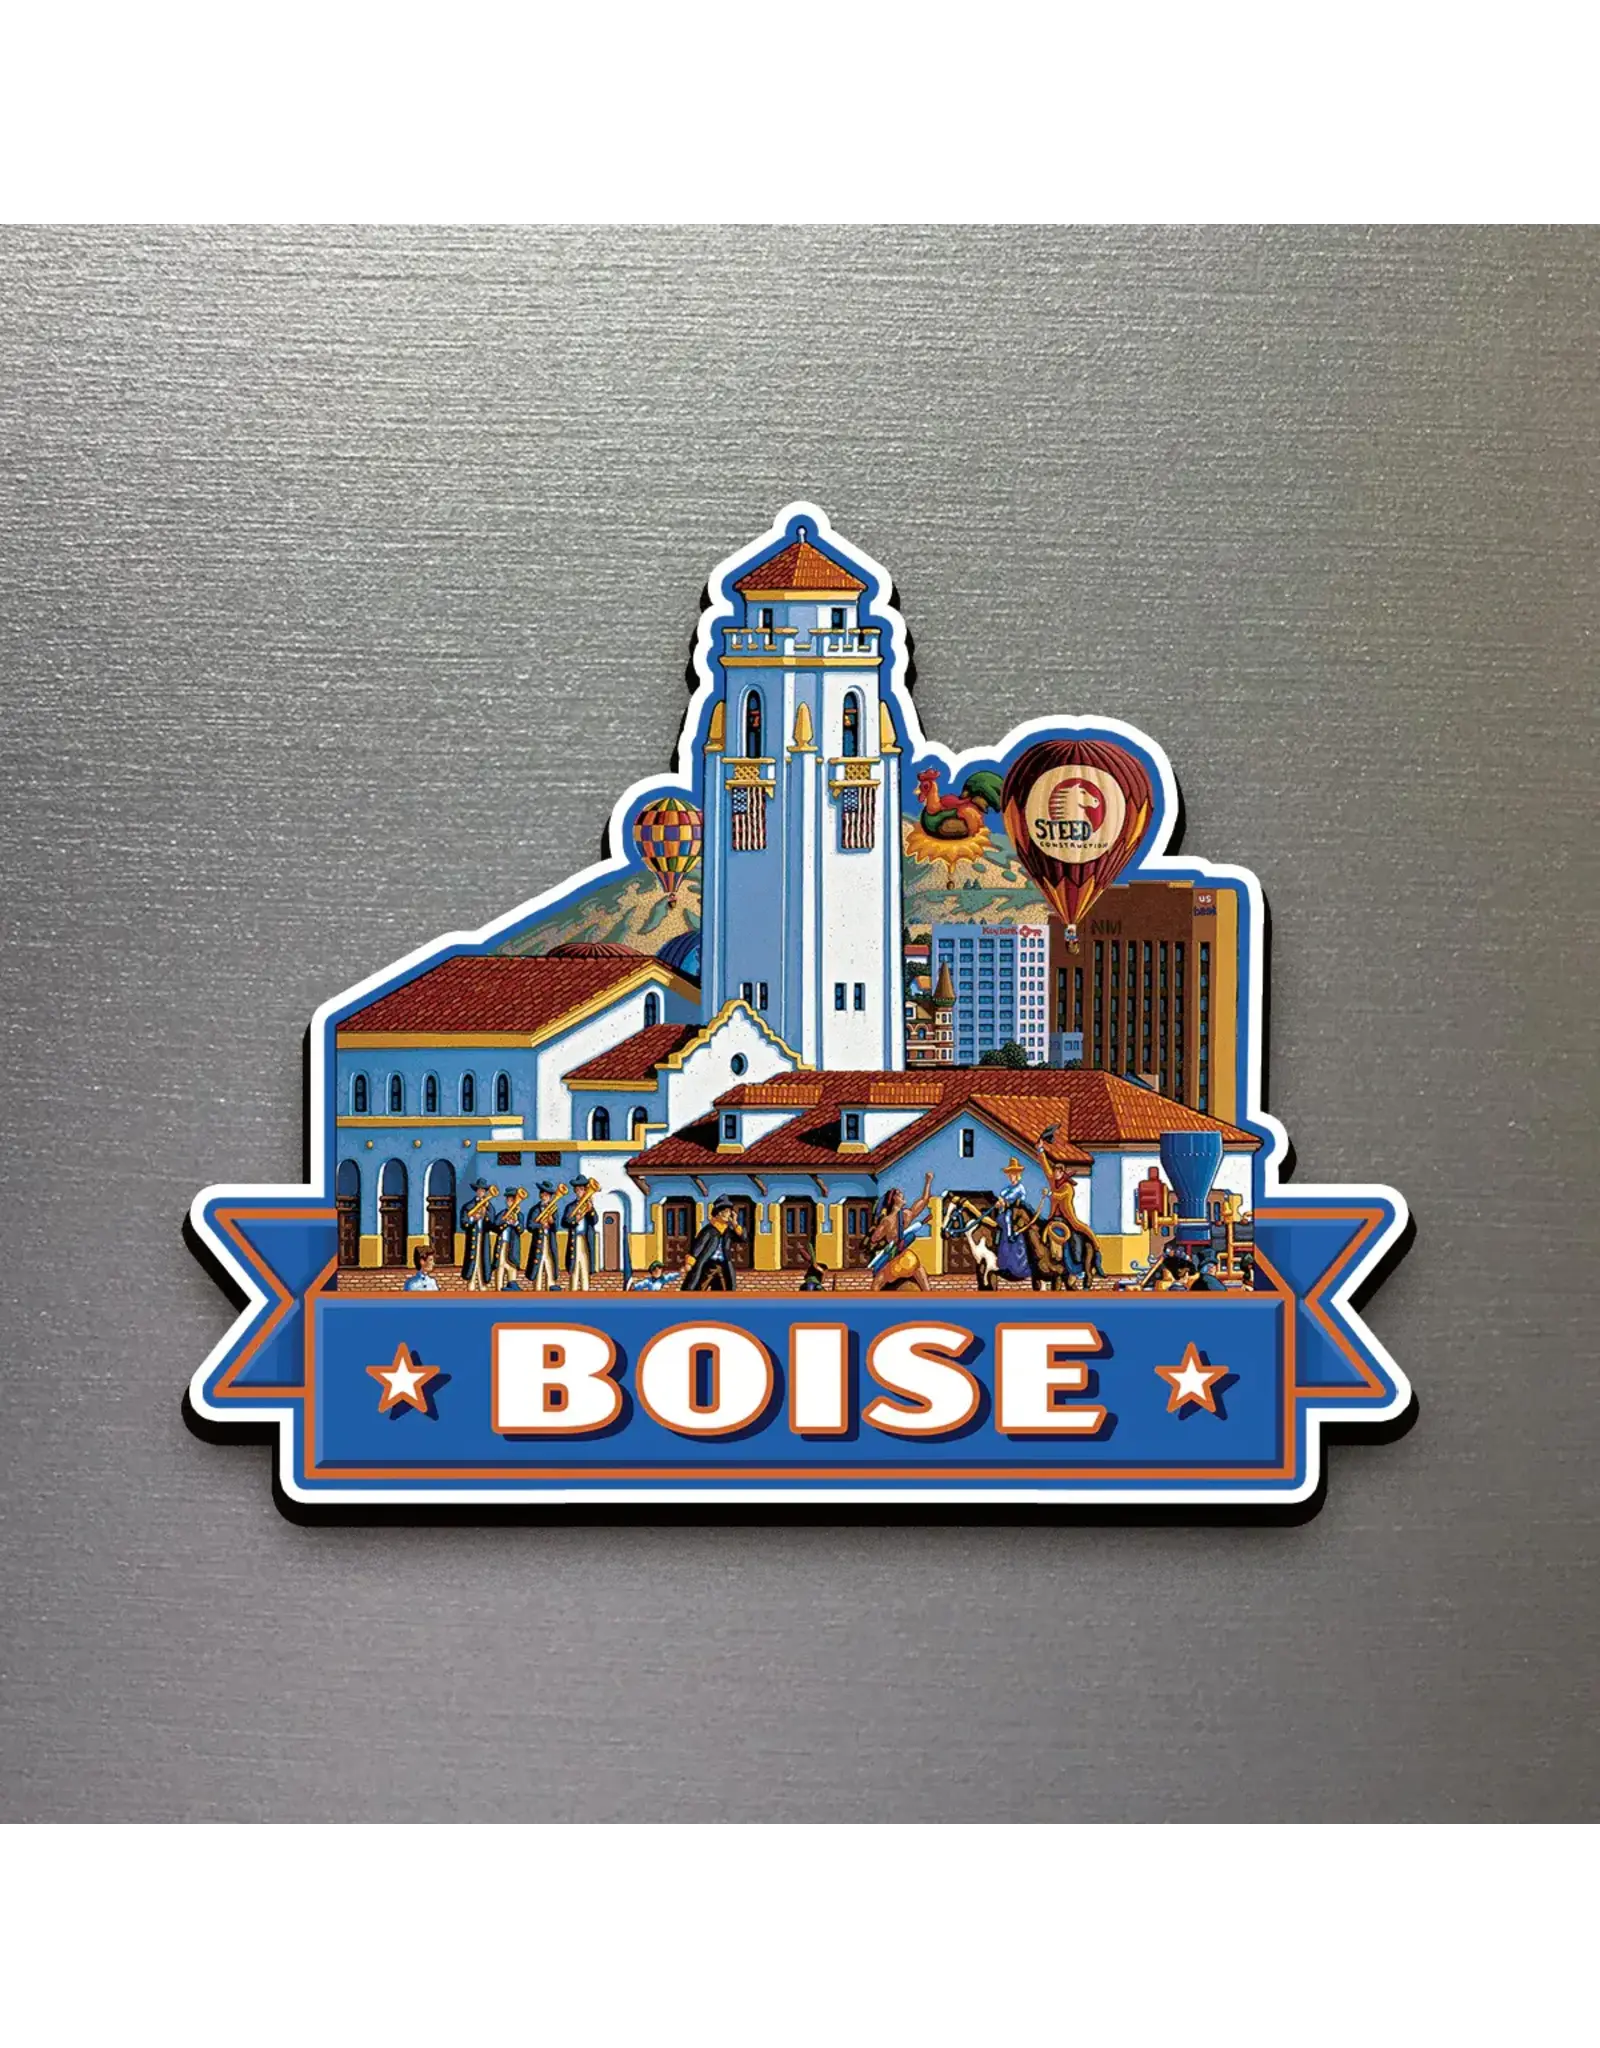 Dowdle Boise Magnet